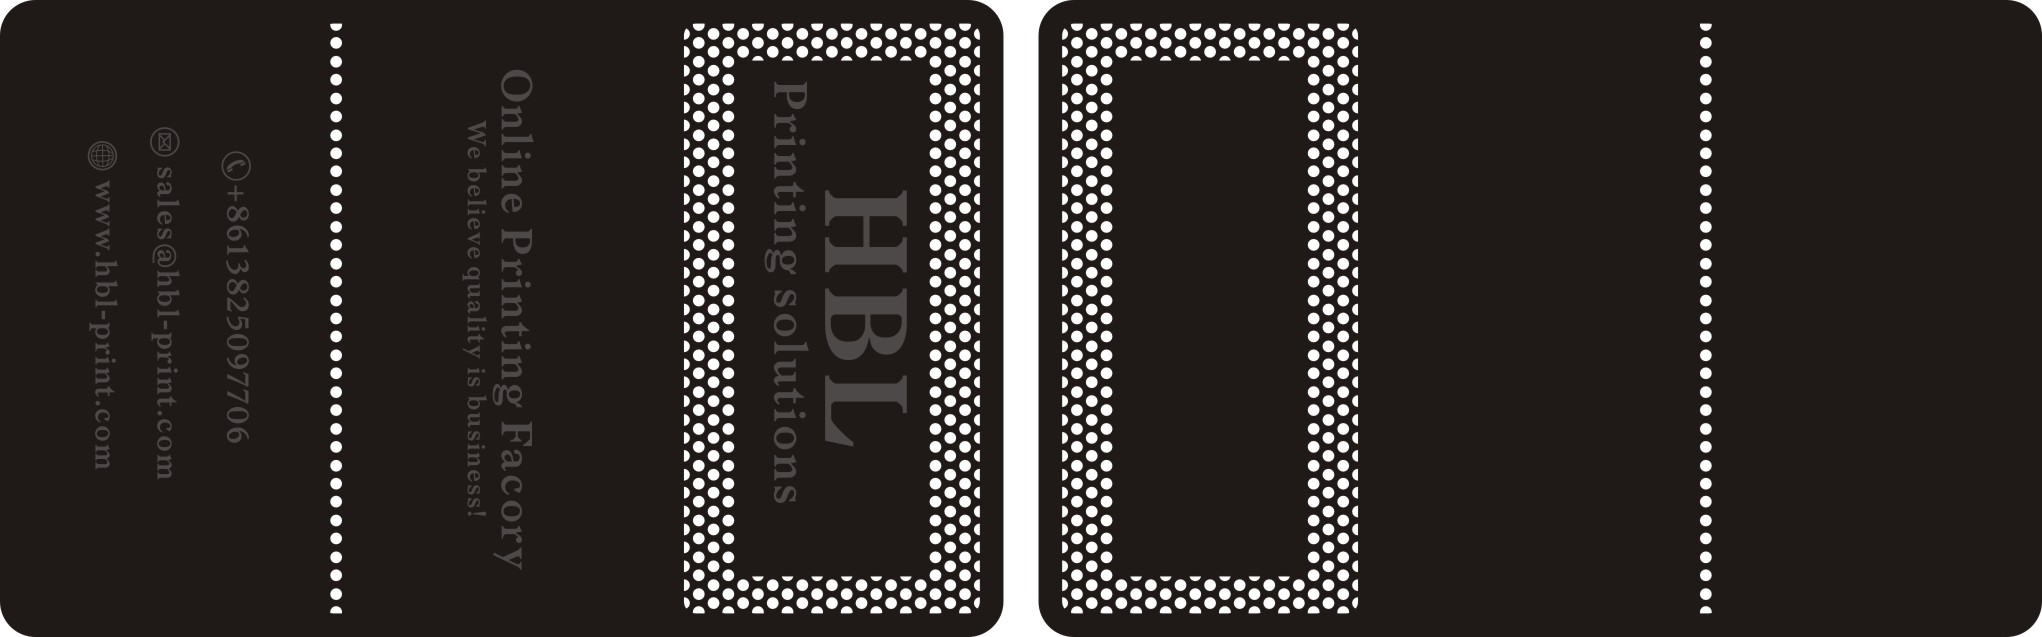 Black Matte Card Template (22)